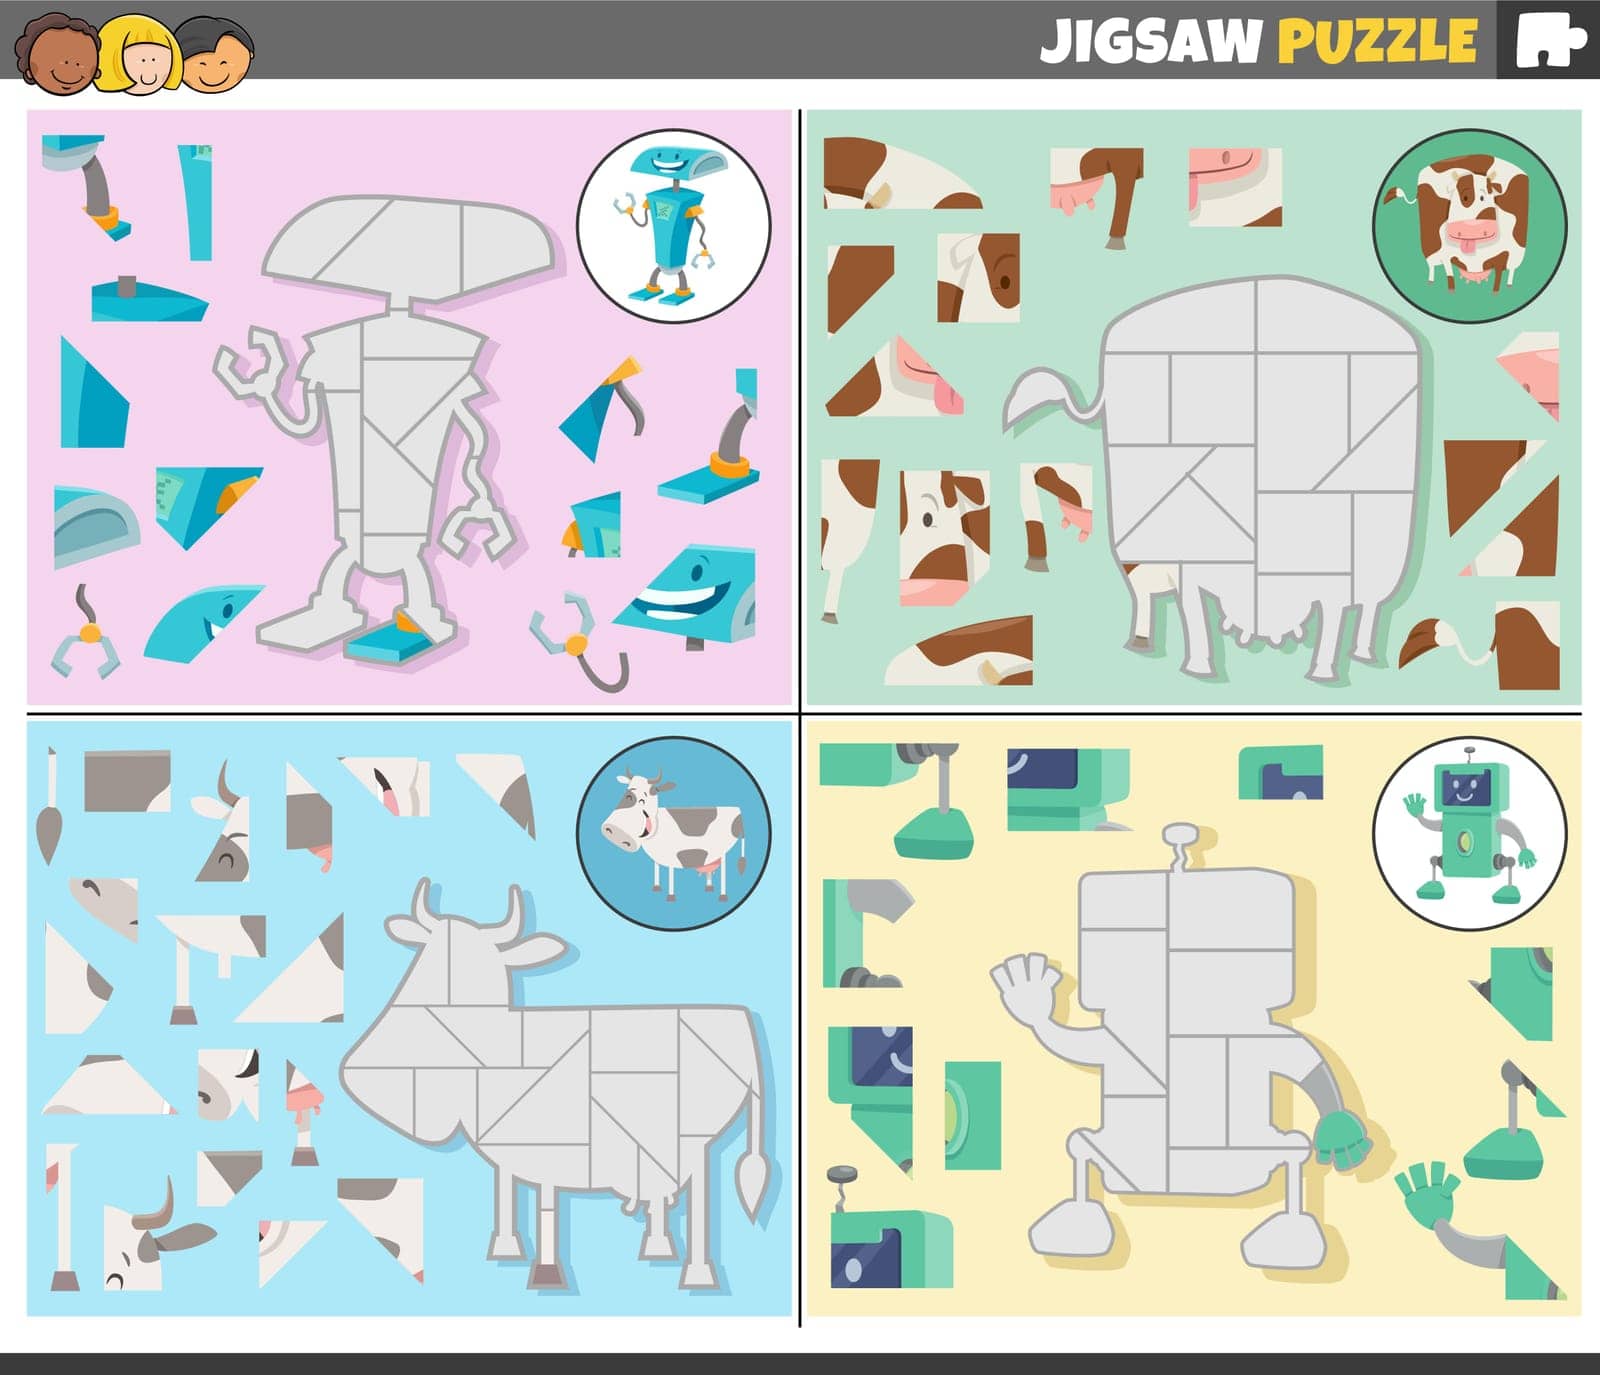 jigsaw puzzle games set with cartoon robots and cows by izakowski